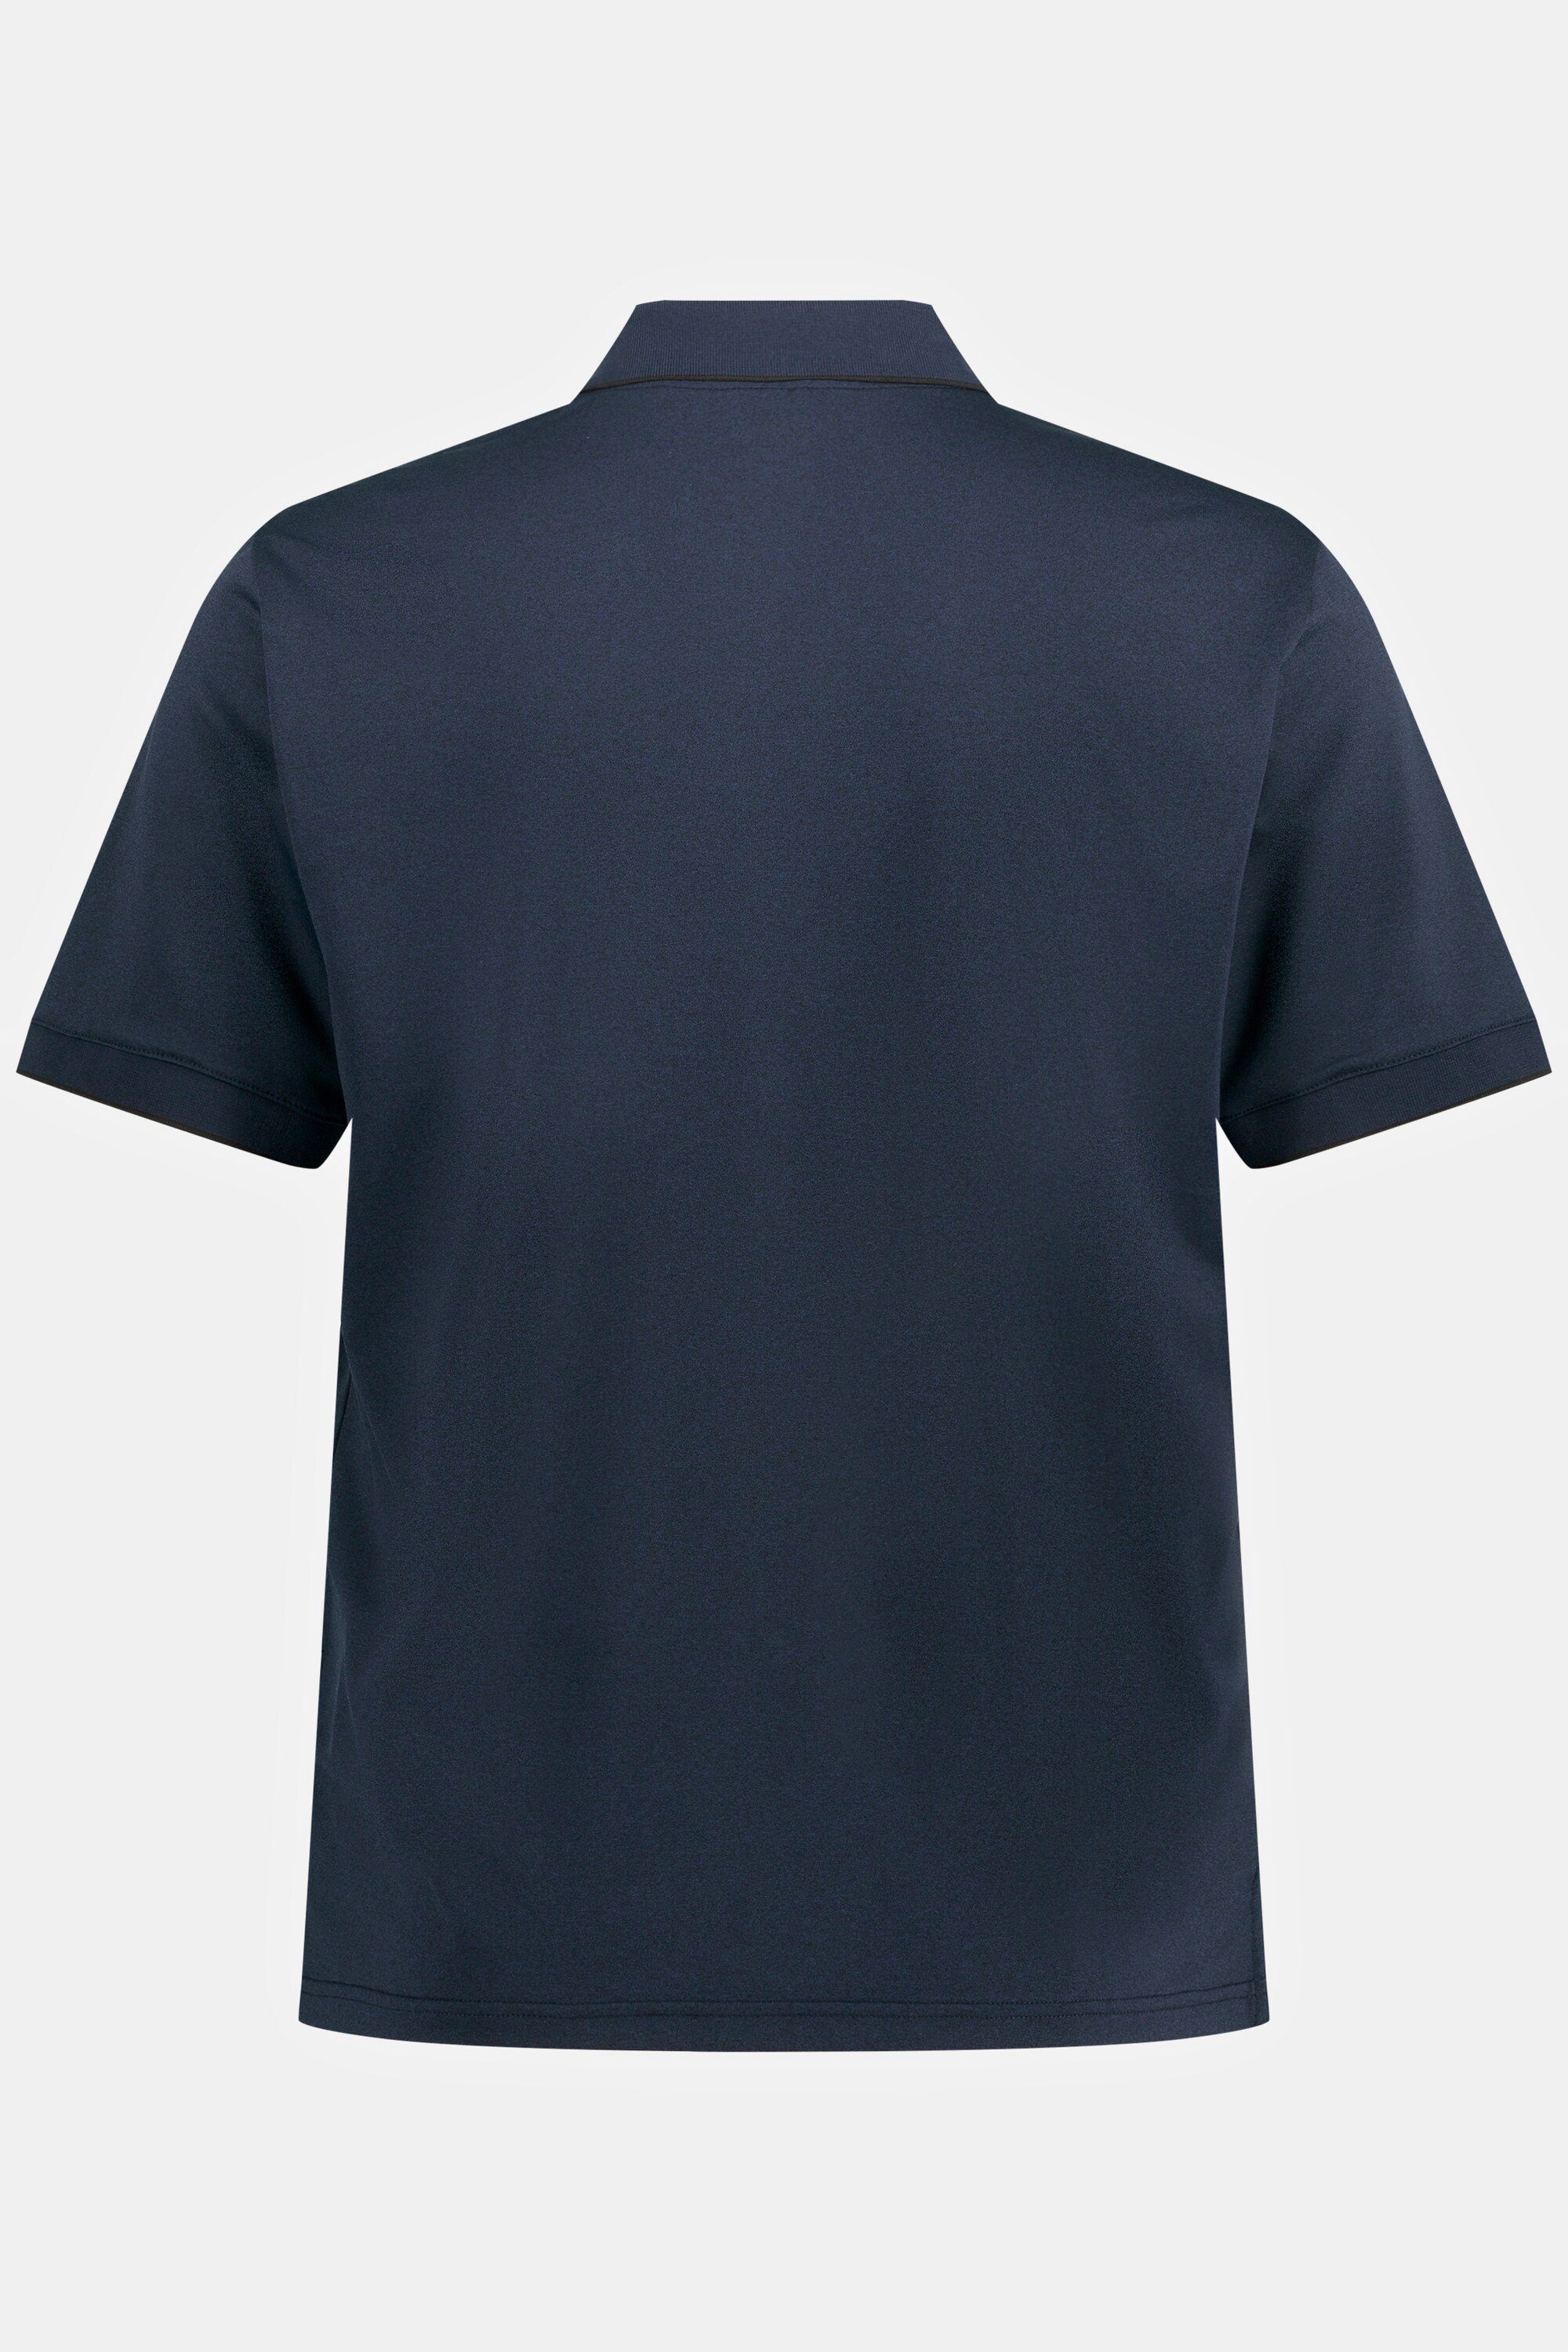 JP1880 Halbarm nachtblau QuickDry Poloshirt Golf mattes Poloshirt